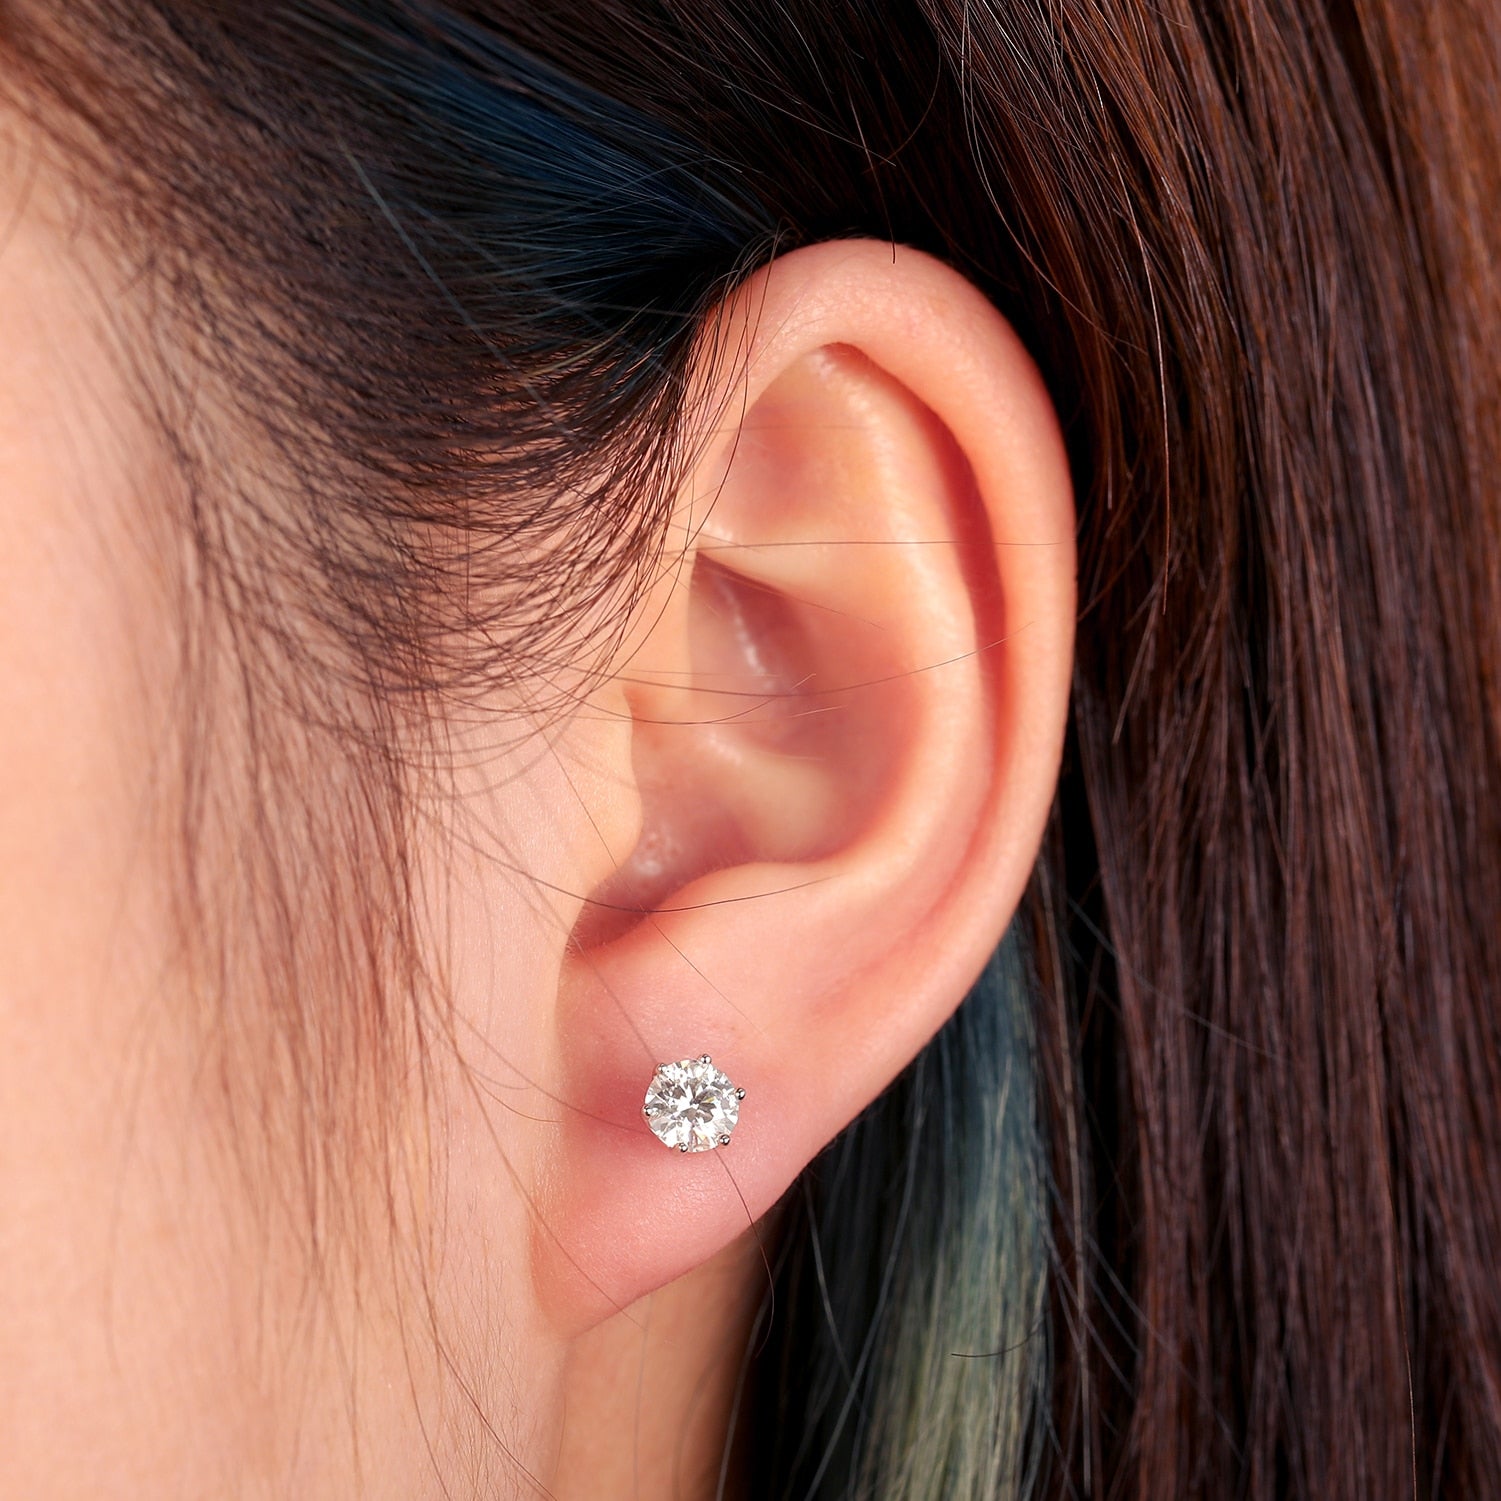 0.5 Carat D Color Moissanite Stud Earrings 100% 925 Sterling Silver